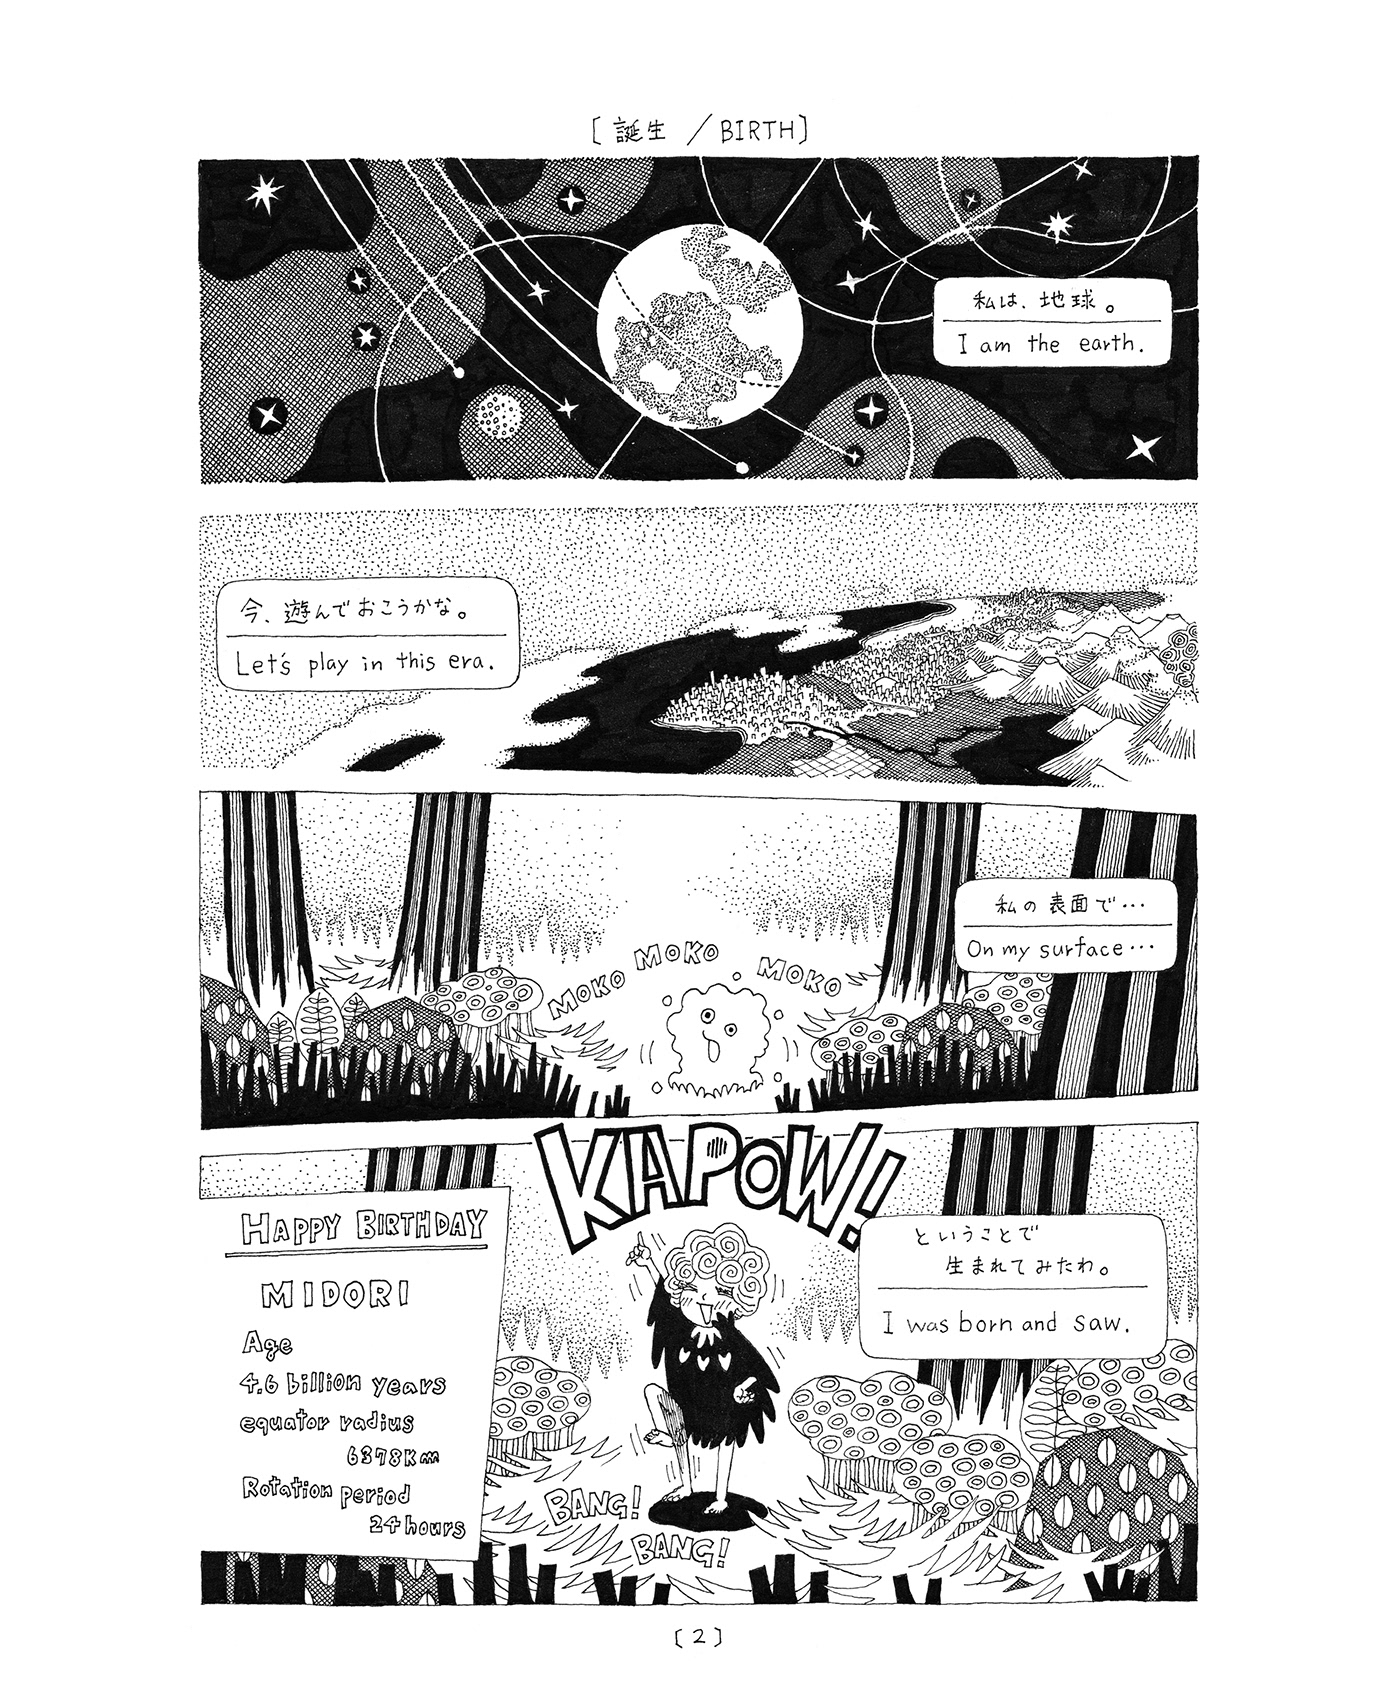 comic Character design  manga artwork artist concept art earth world girls women